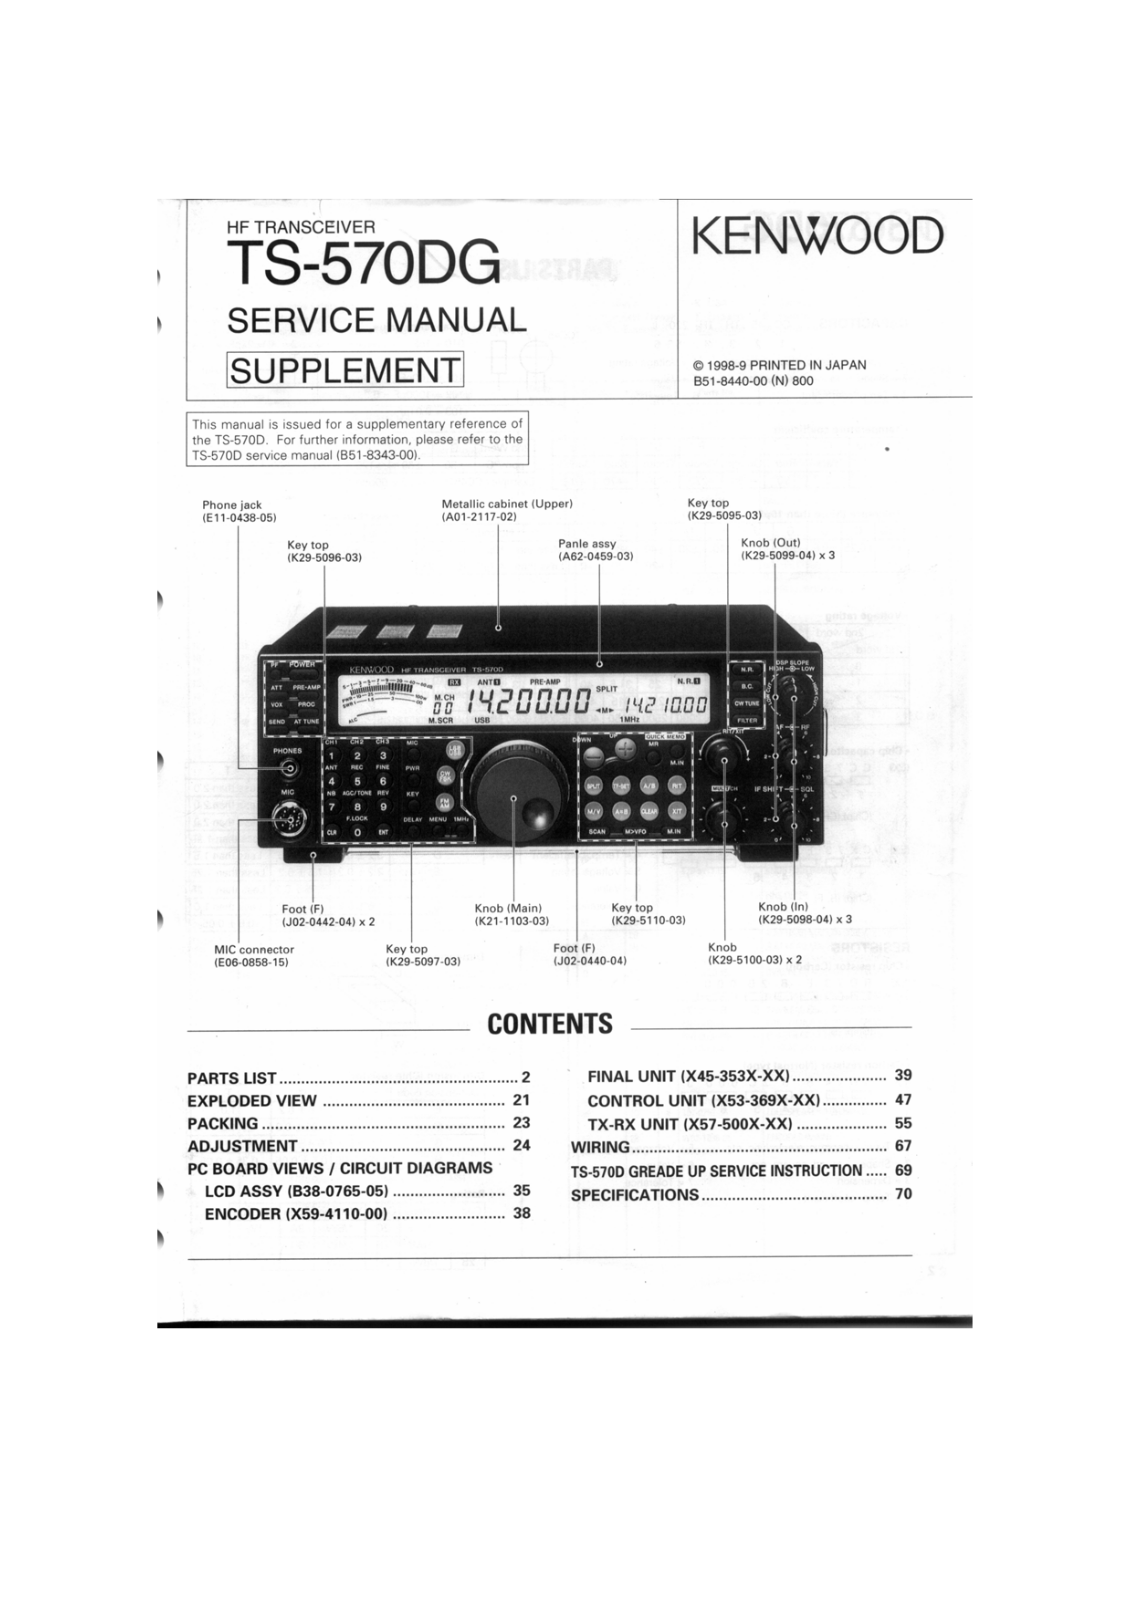 Kenwood TS-570DG Manual